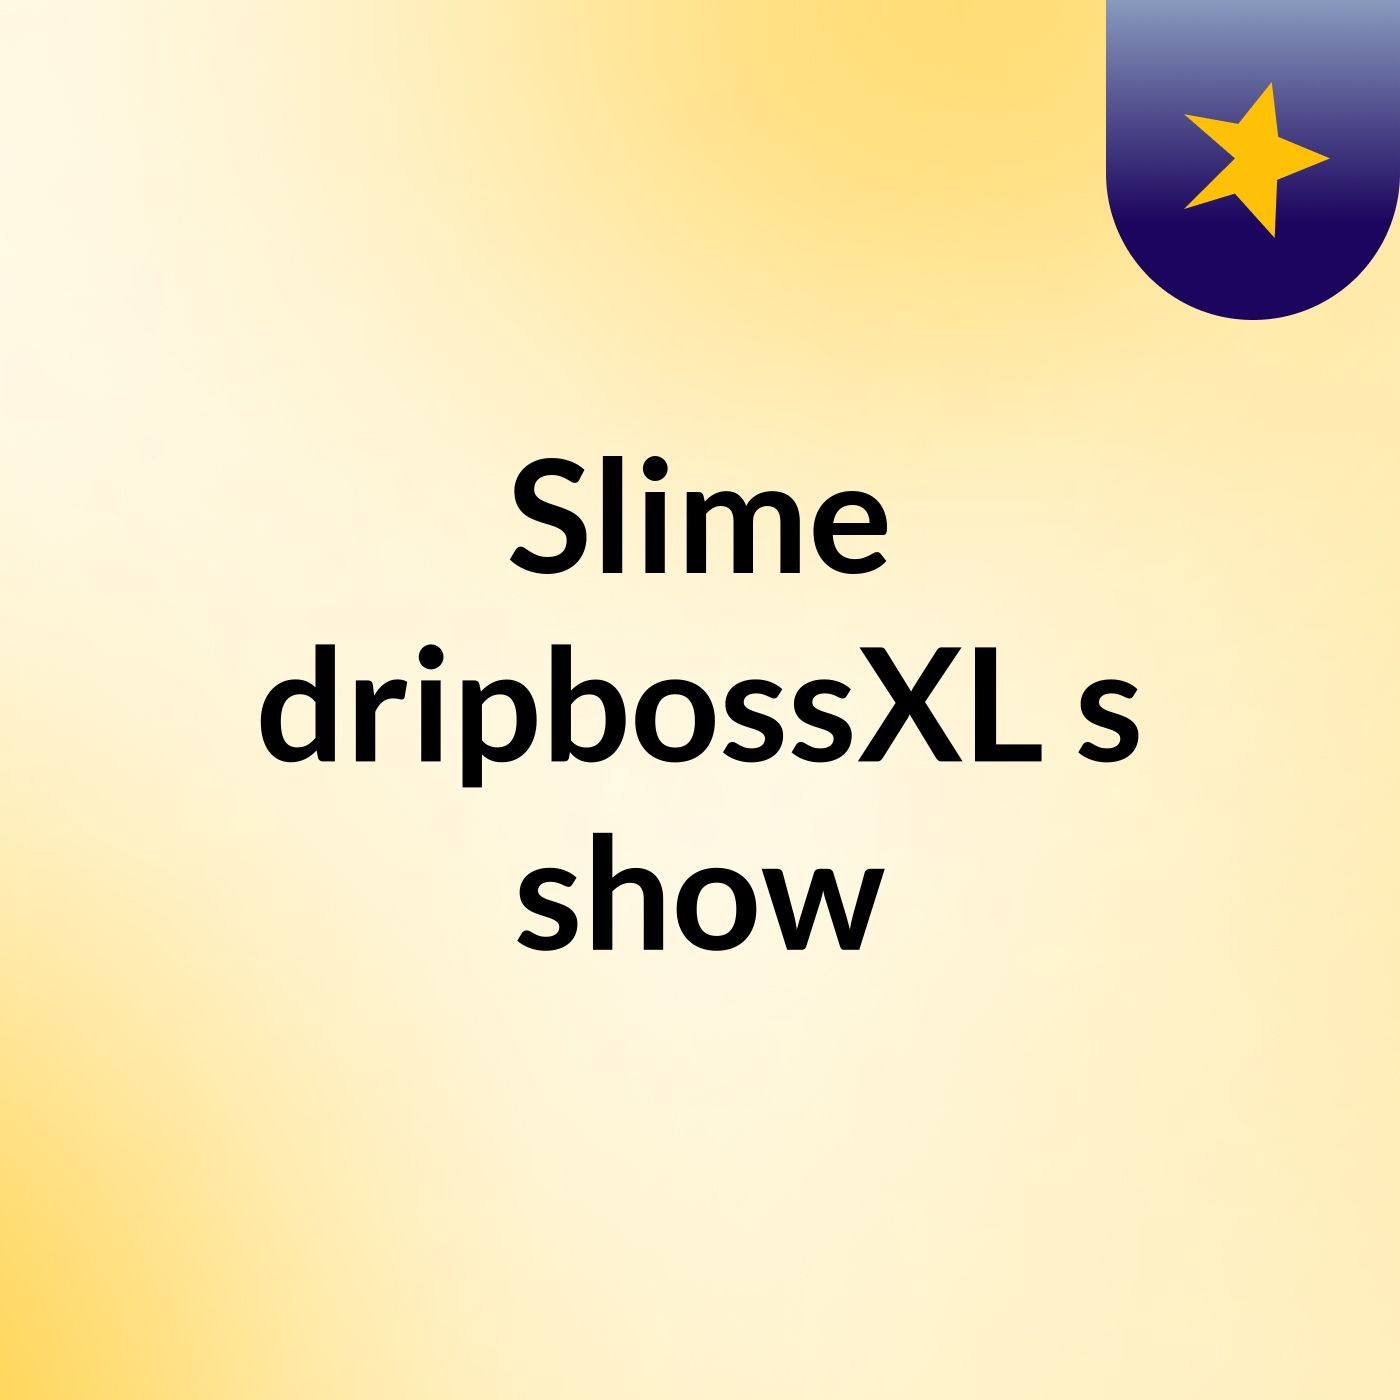 Episode 4 - Slime dripbossXL's show